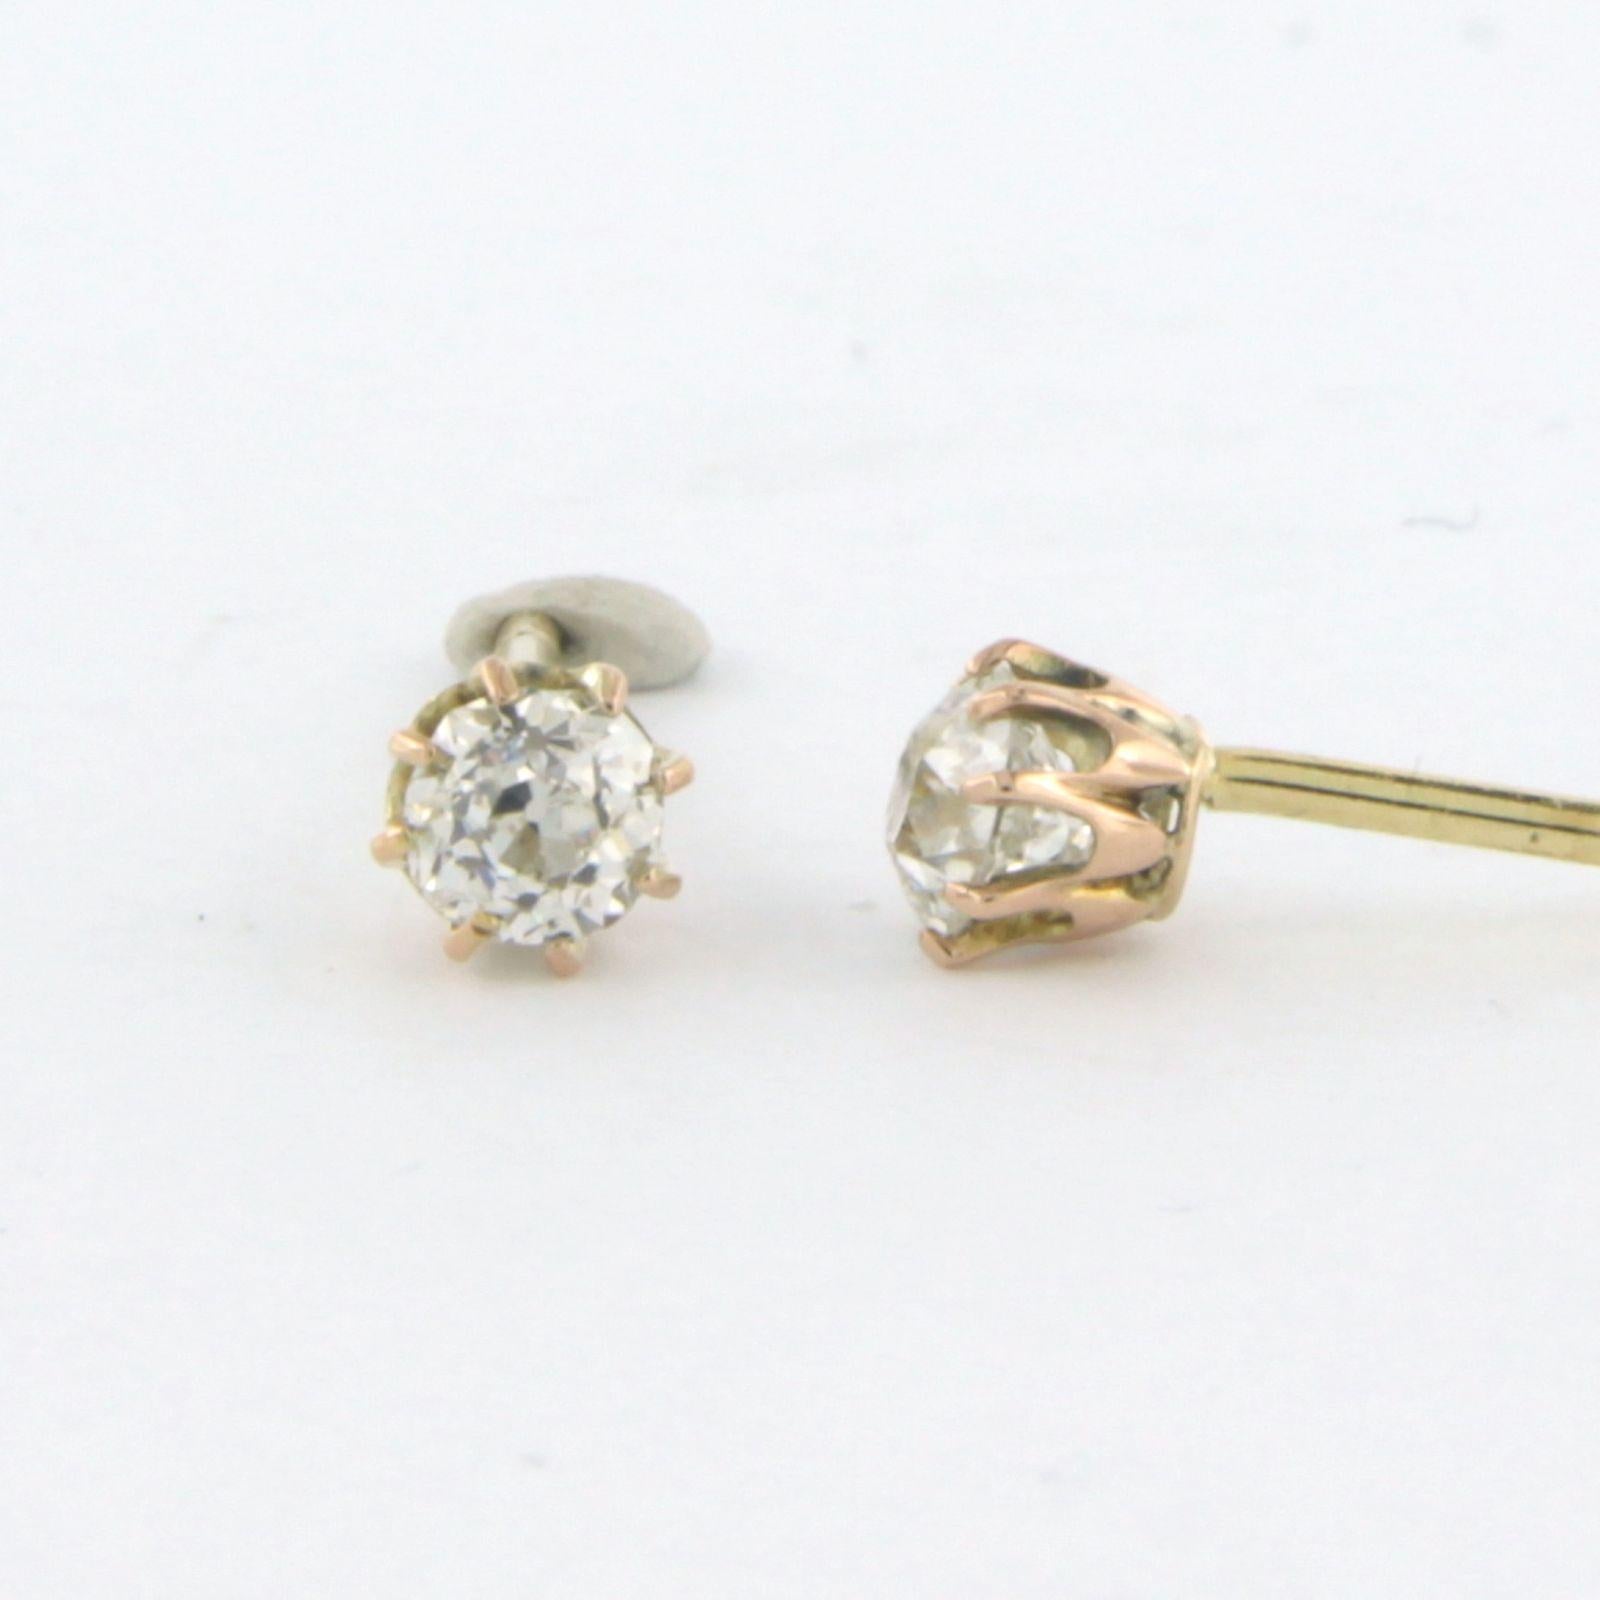 Women's Earring studs set with diamonds 18k yellow gold